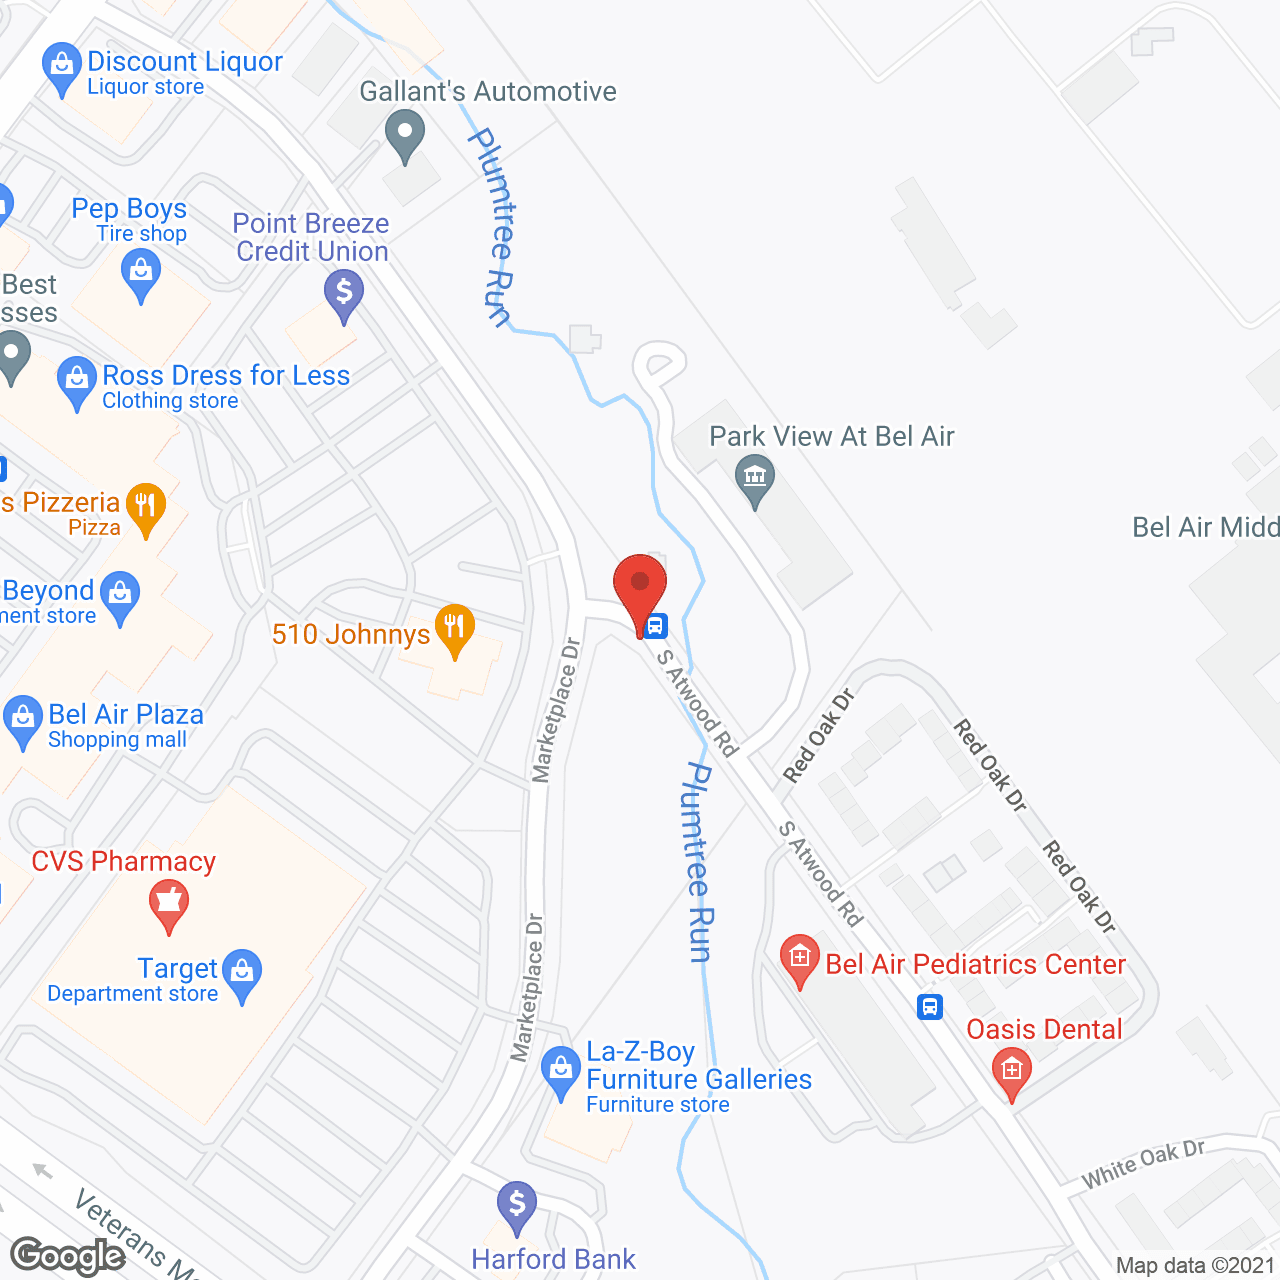 Park View at Bel Air in google map